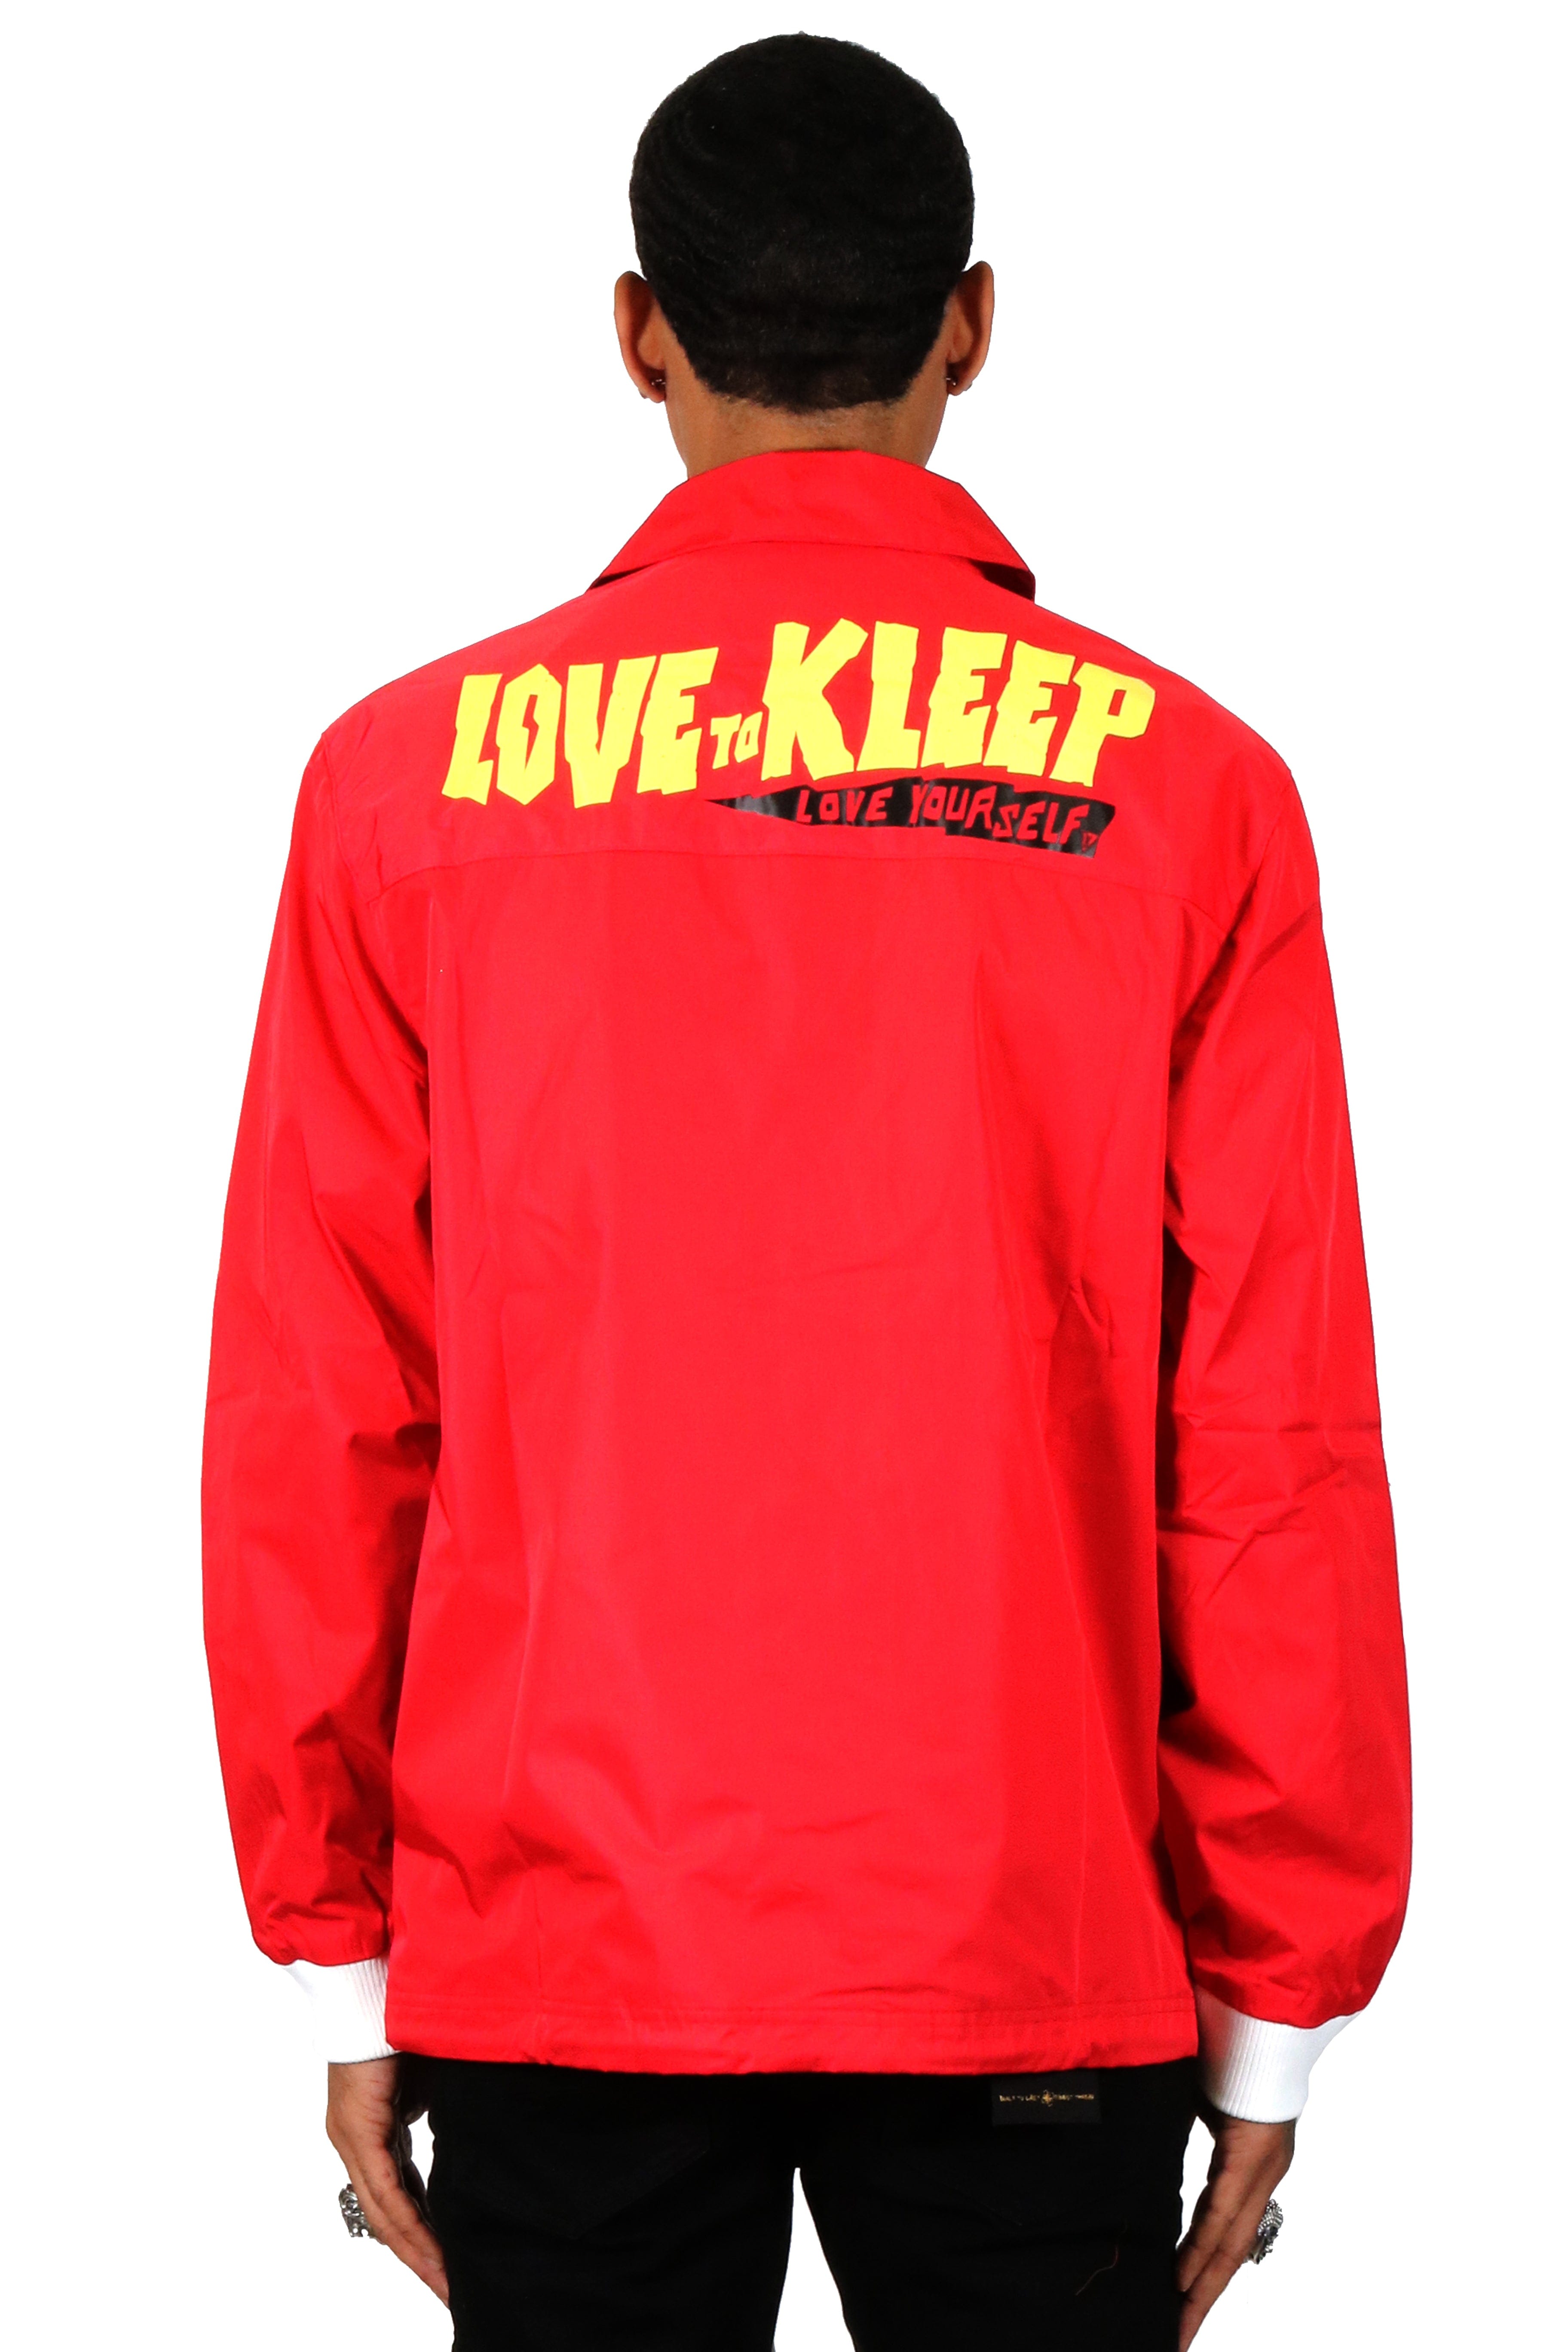 KLEEP Men's Jacket MAROON Men's premium nylon coach jacet